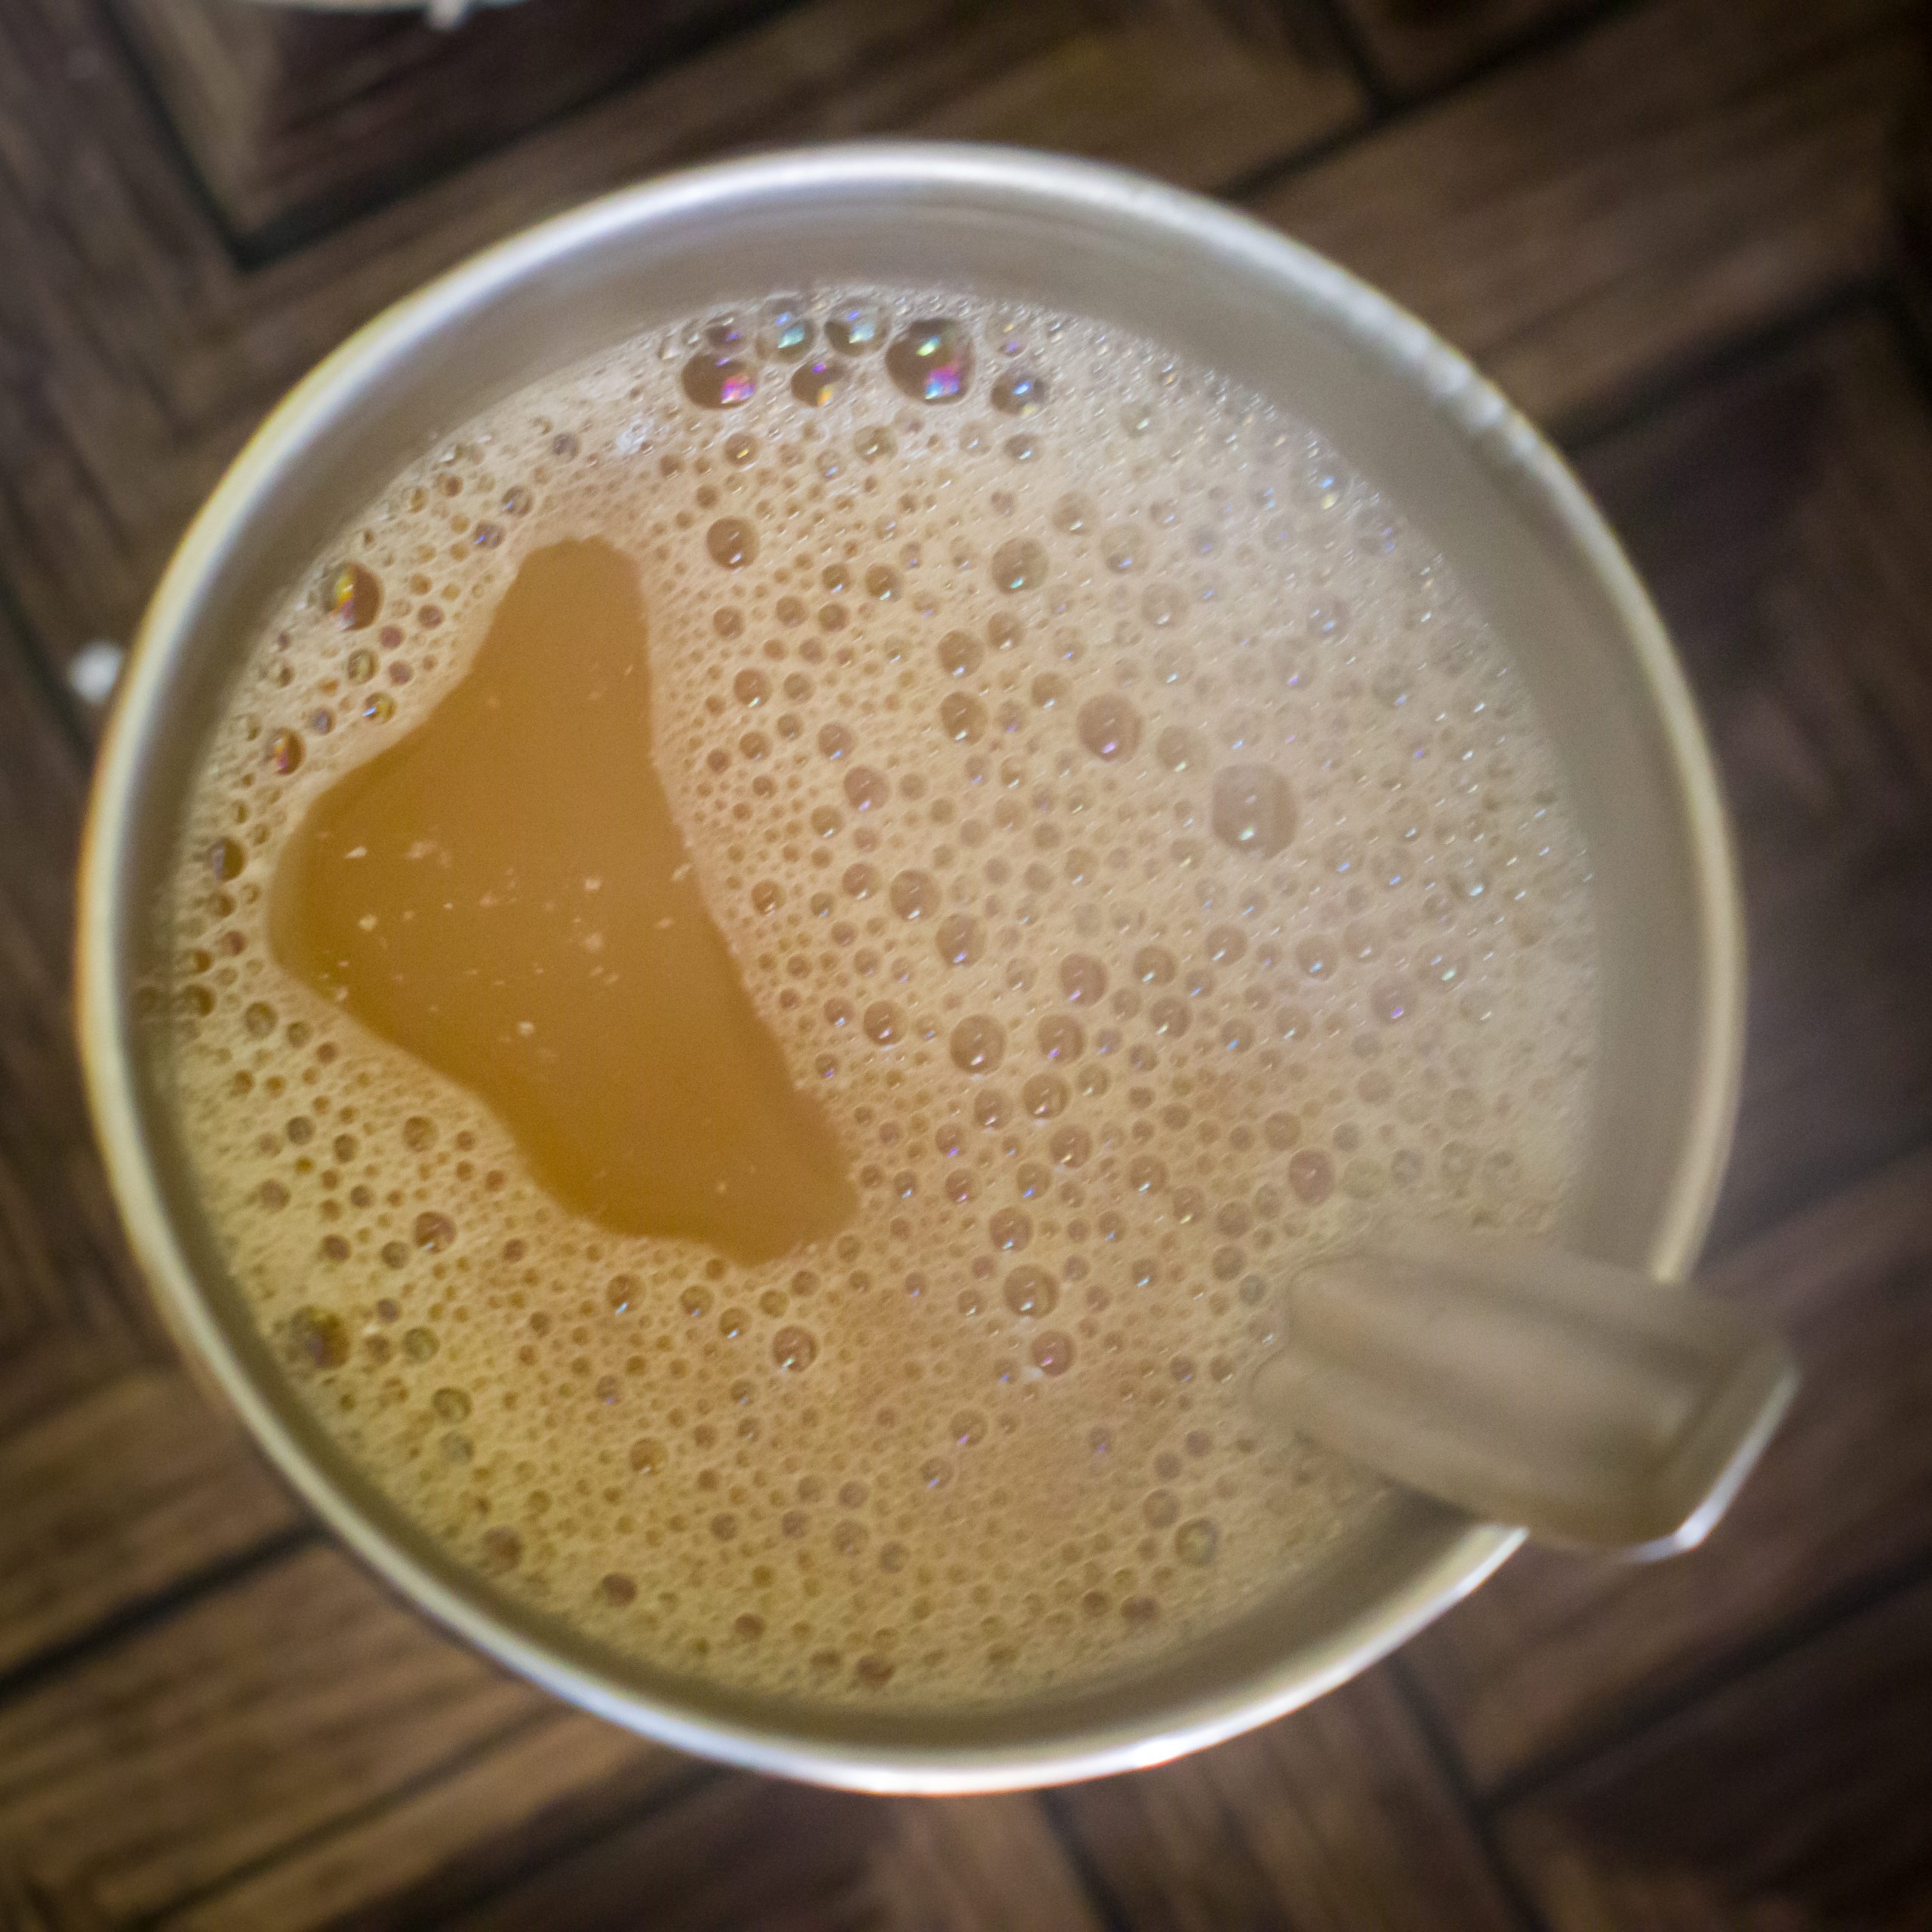 Bubbles in a tea cup